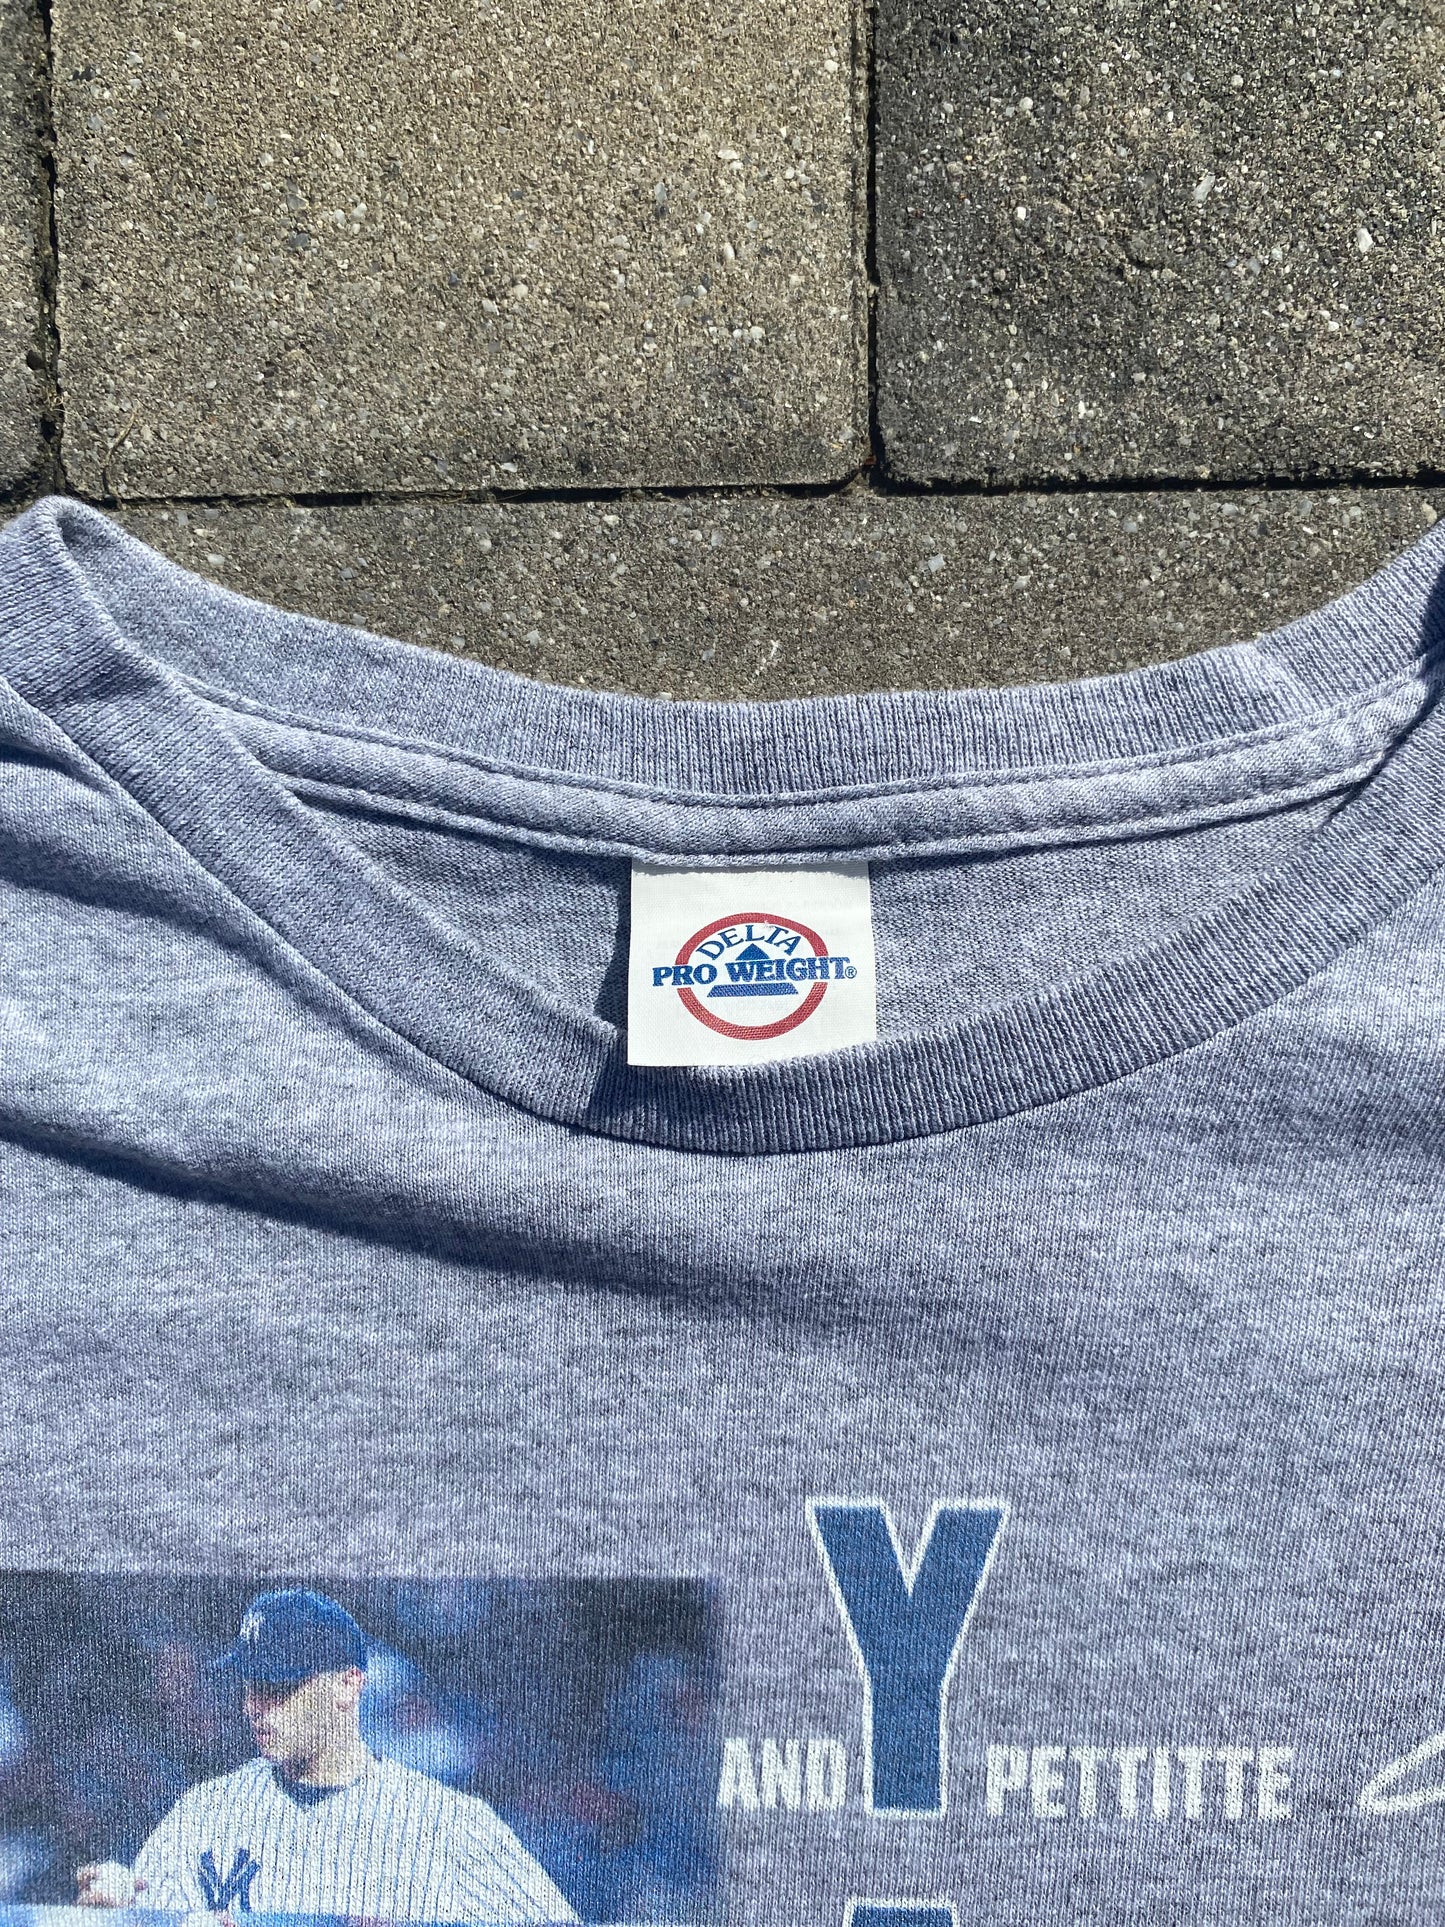 Yankees Legends Signature Shirt